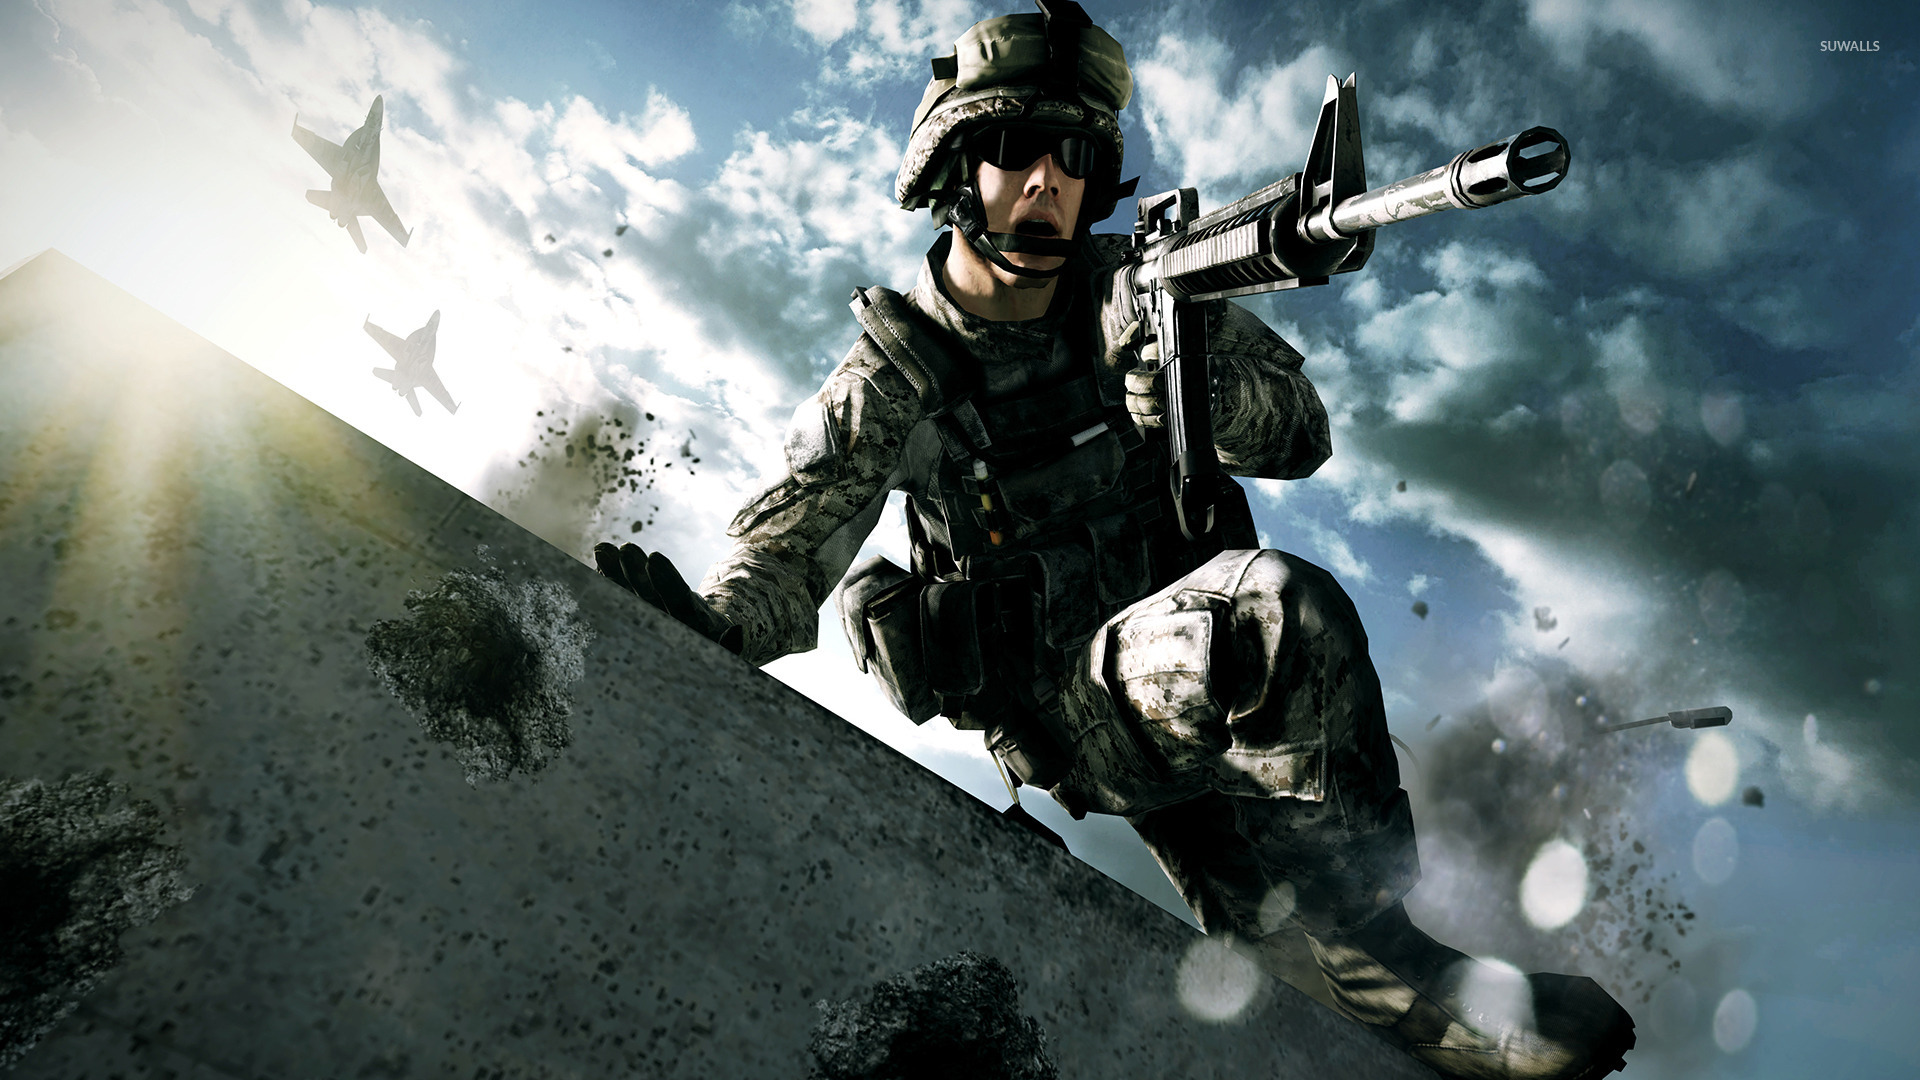 Battlefield 4 wallpaper 1920x1080 1920x1080